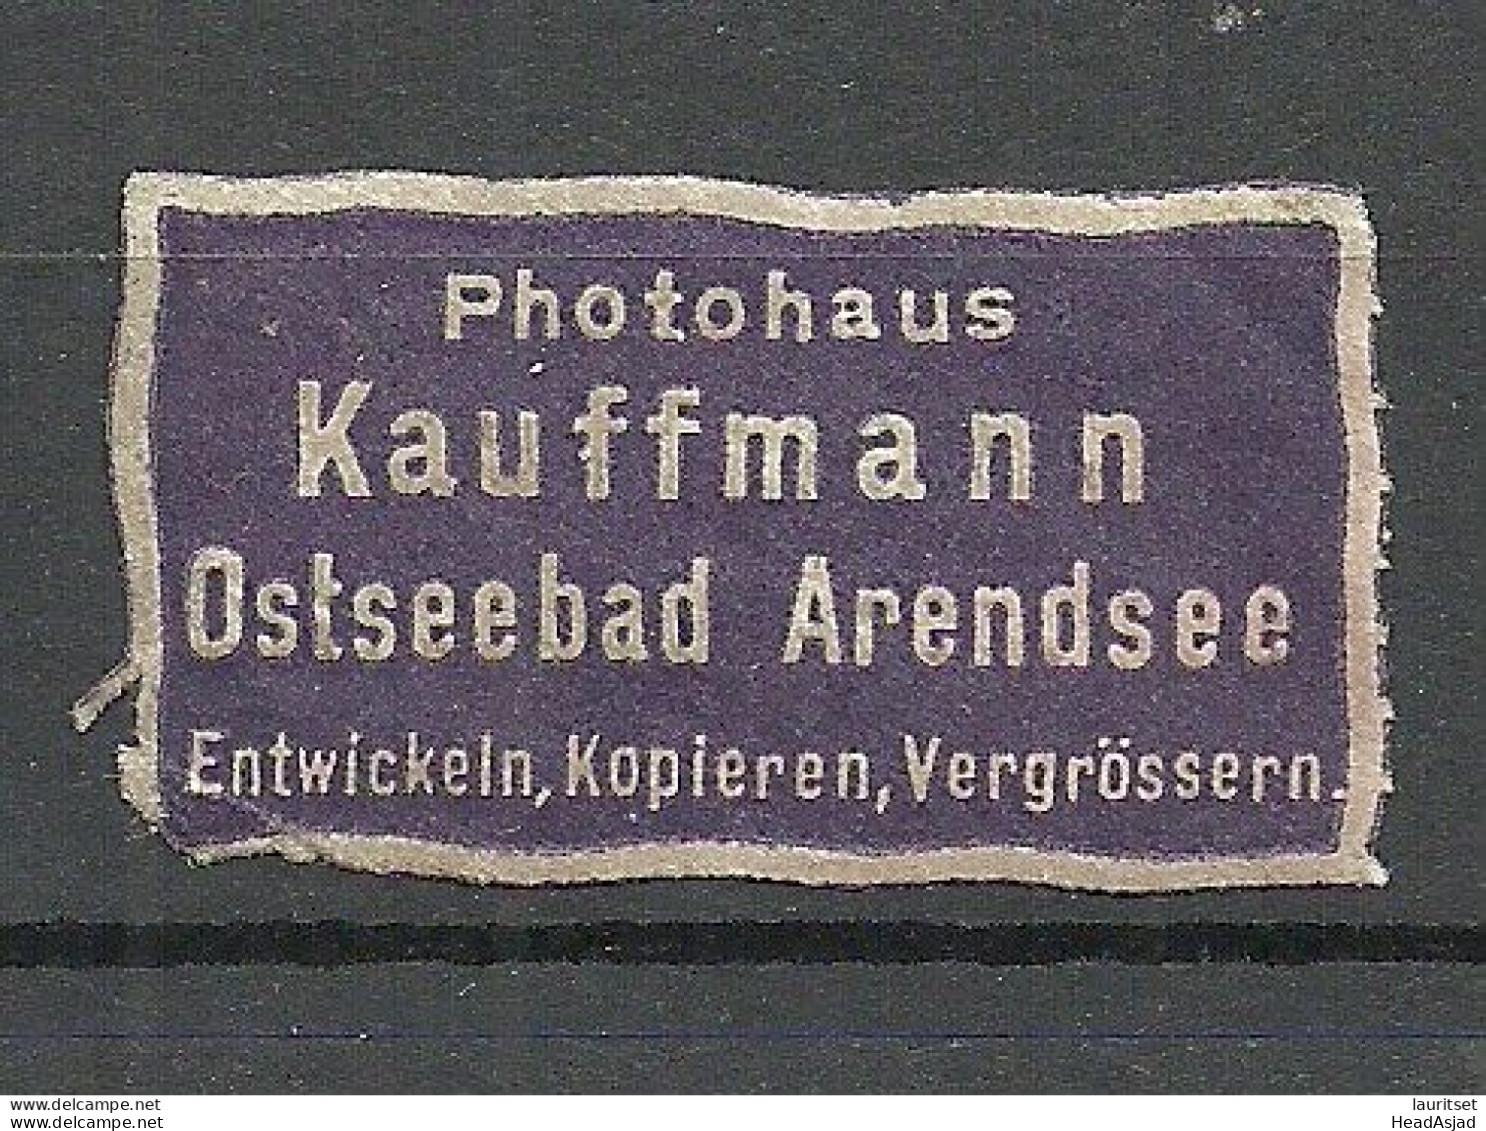 Deutschland Germany Photohaus Kauffmann Ostseebad Arendsee Reklamemarke Siegelmarke Seal - Other & Unclassified